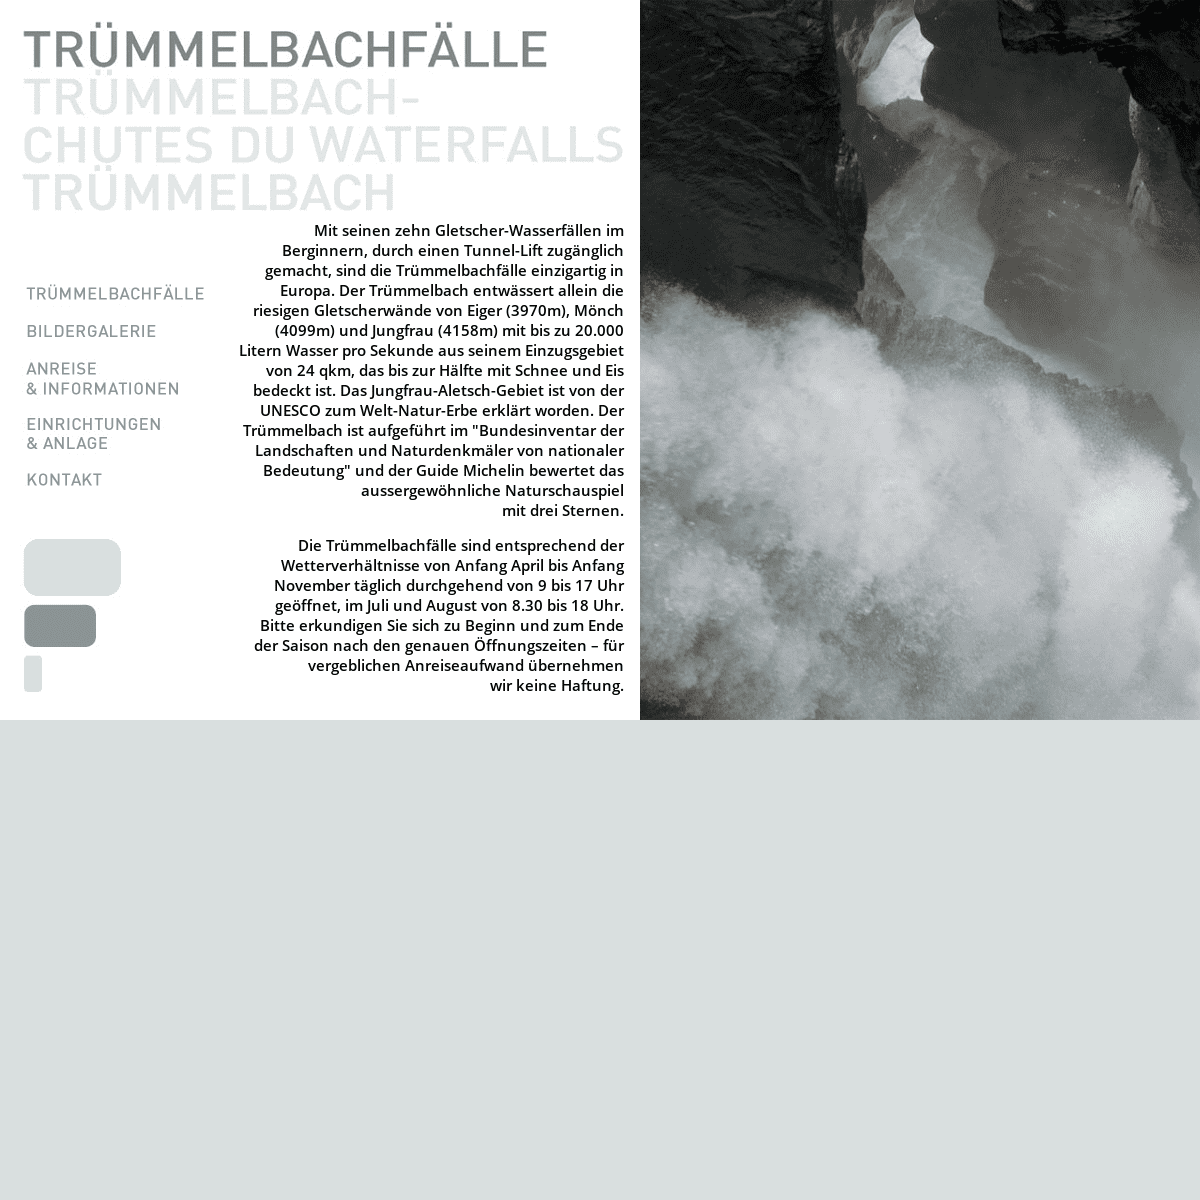 A complete backup of https://truemmelbachfaelle.ch